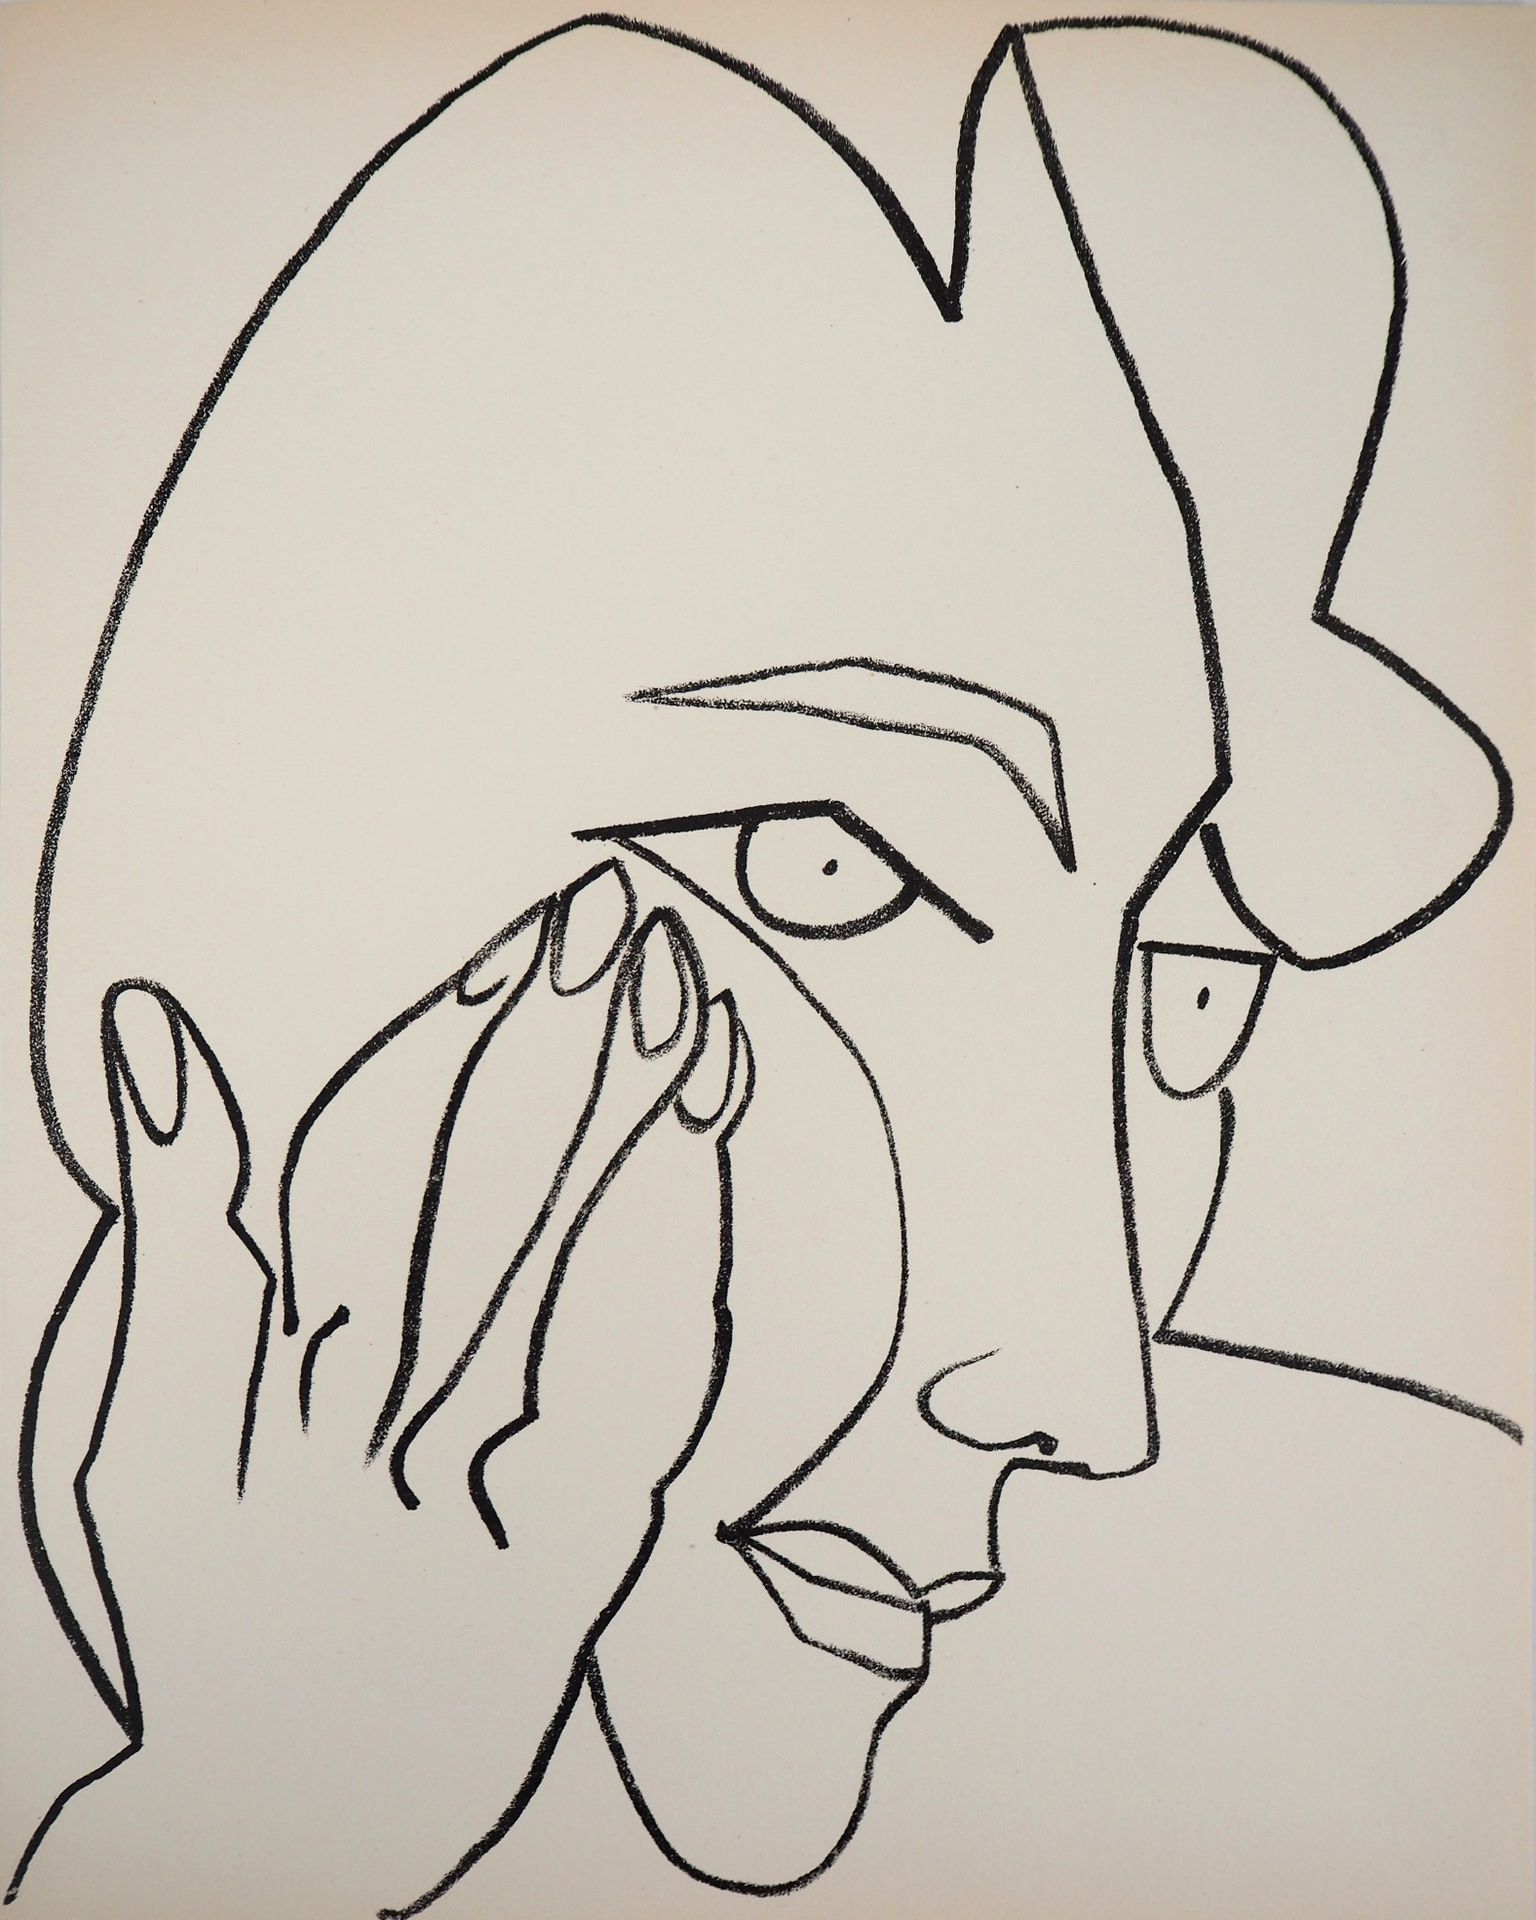 FRANÇOISE GILOT 弗朗索瓦丝-吉洛特 (1921)

思考的女人，1951年

原始石版画

马莱梭织纸上 28 x 22.5 cm

印刷了36&hellip;